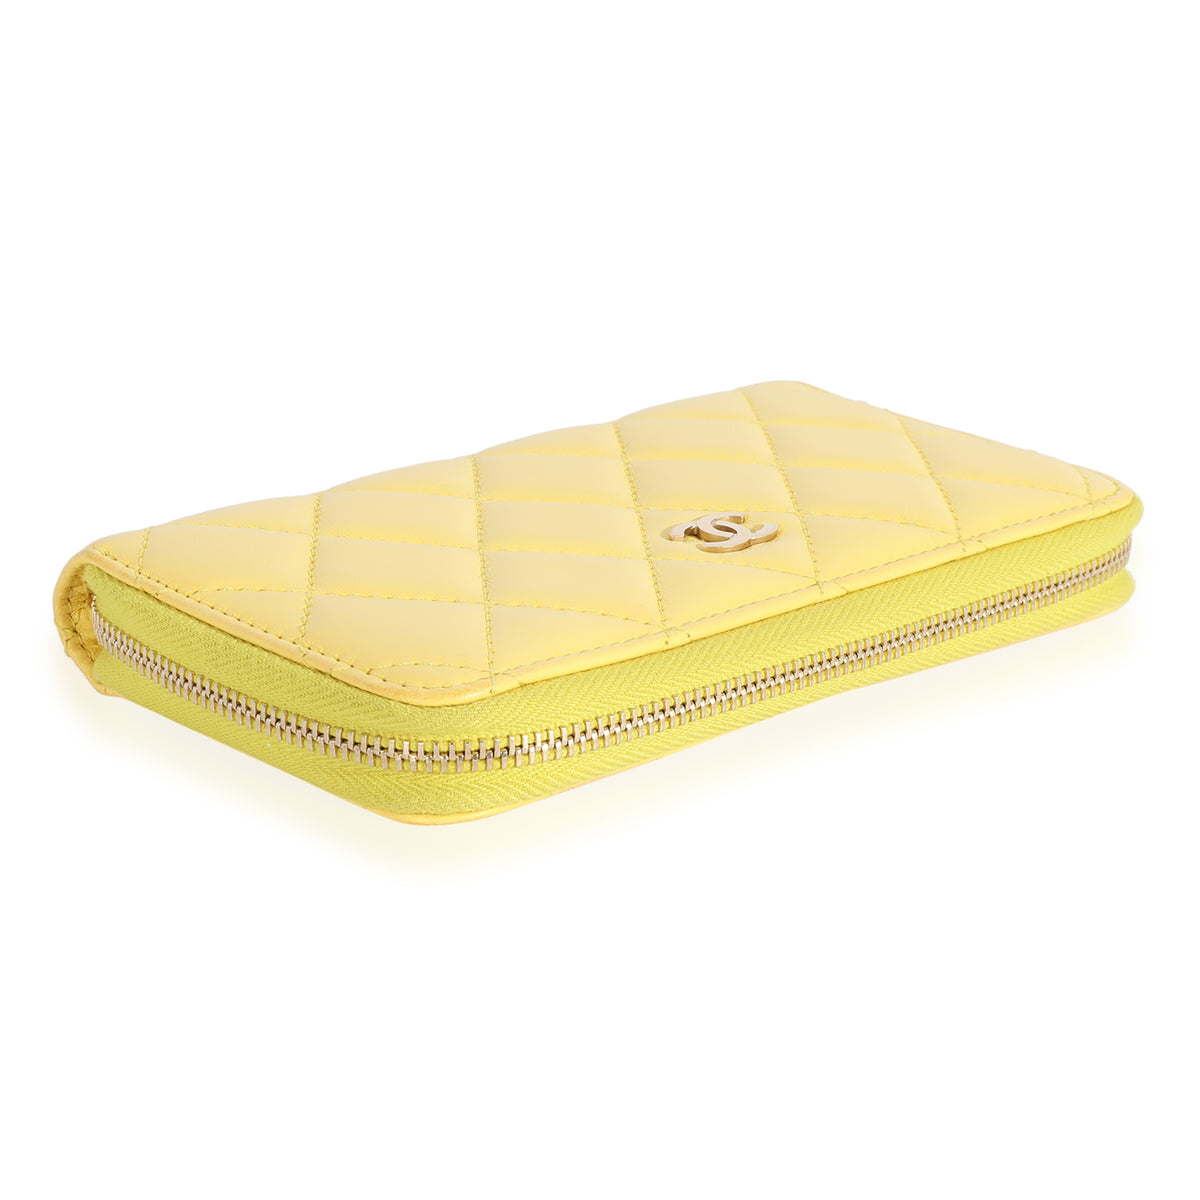 Chanel Yellow Quilted Lambskin Medium Zip-Around Wallet